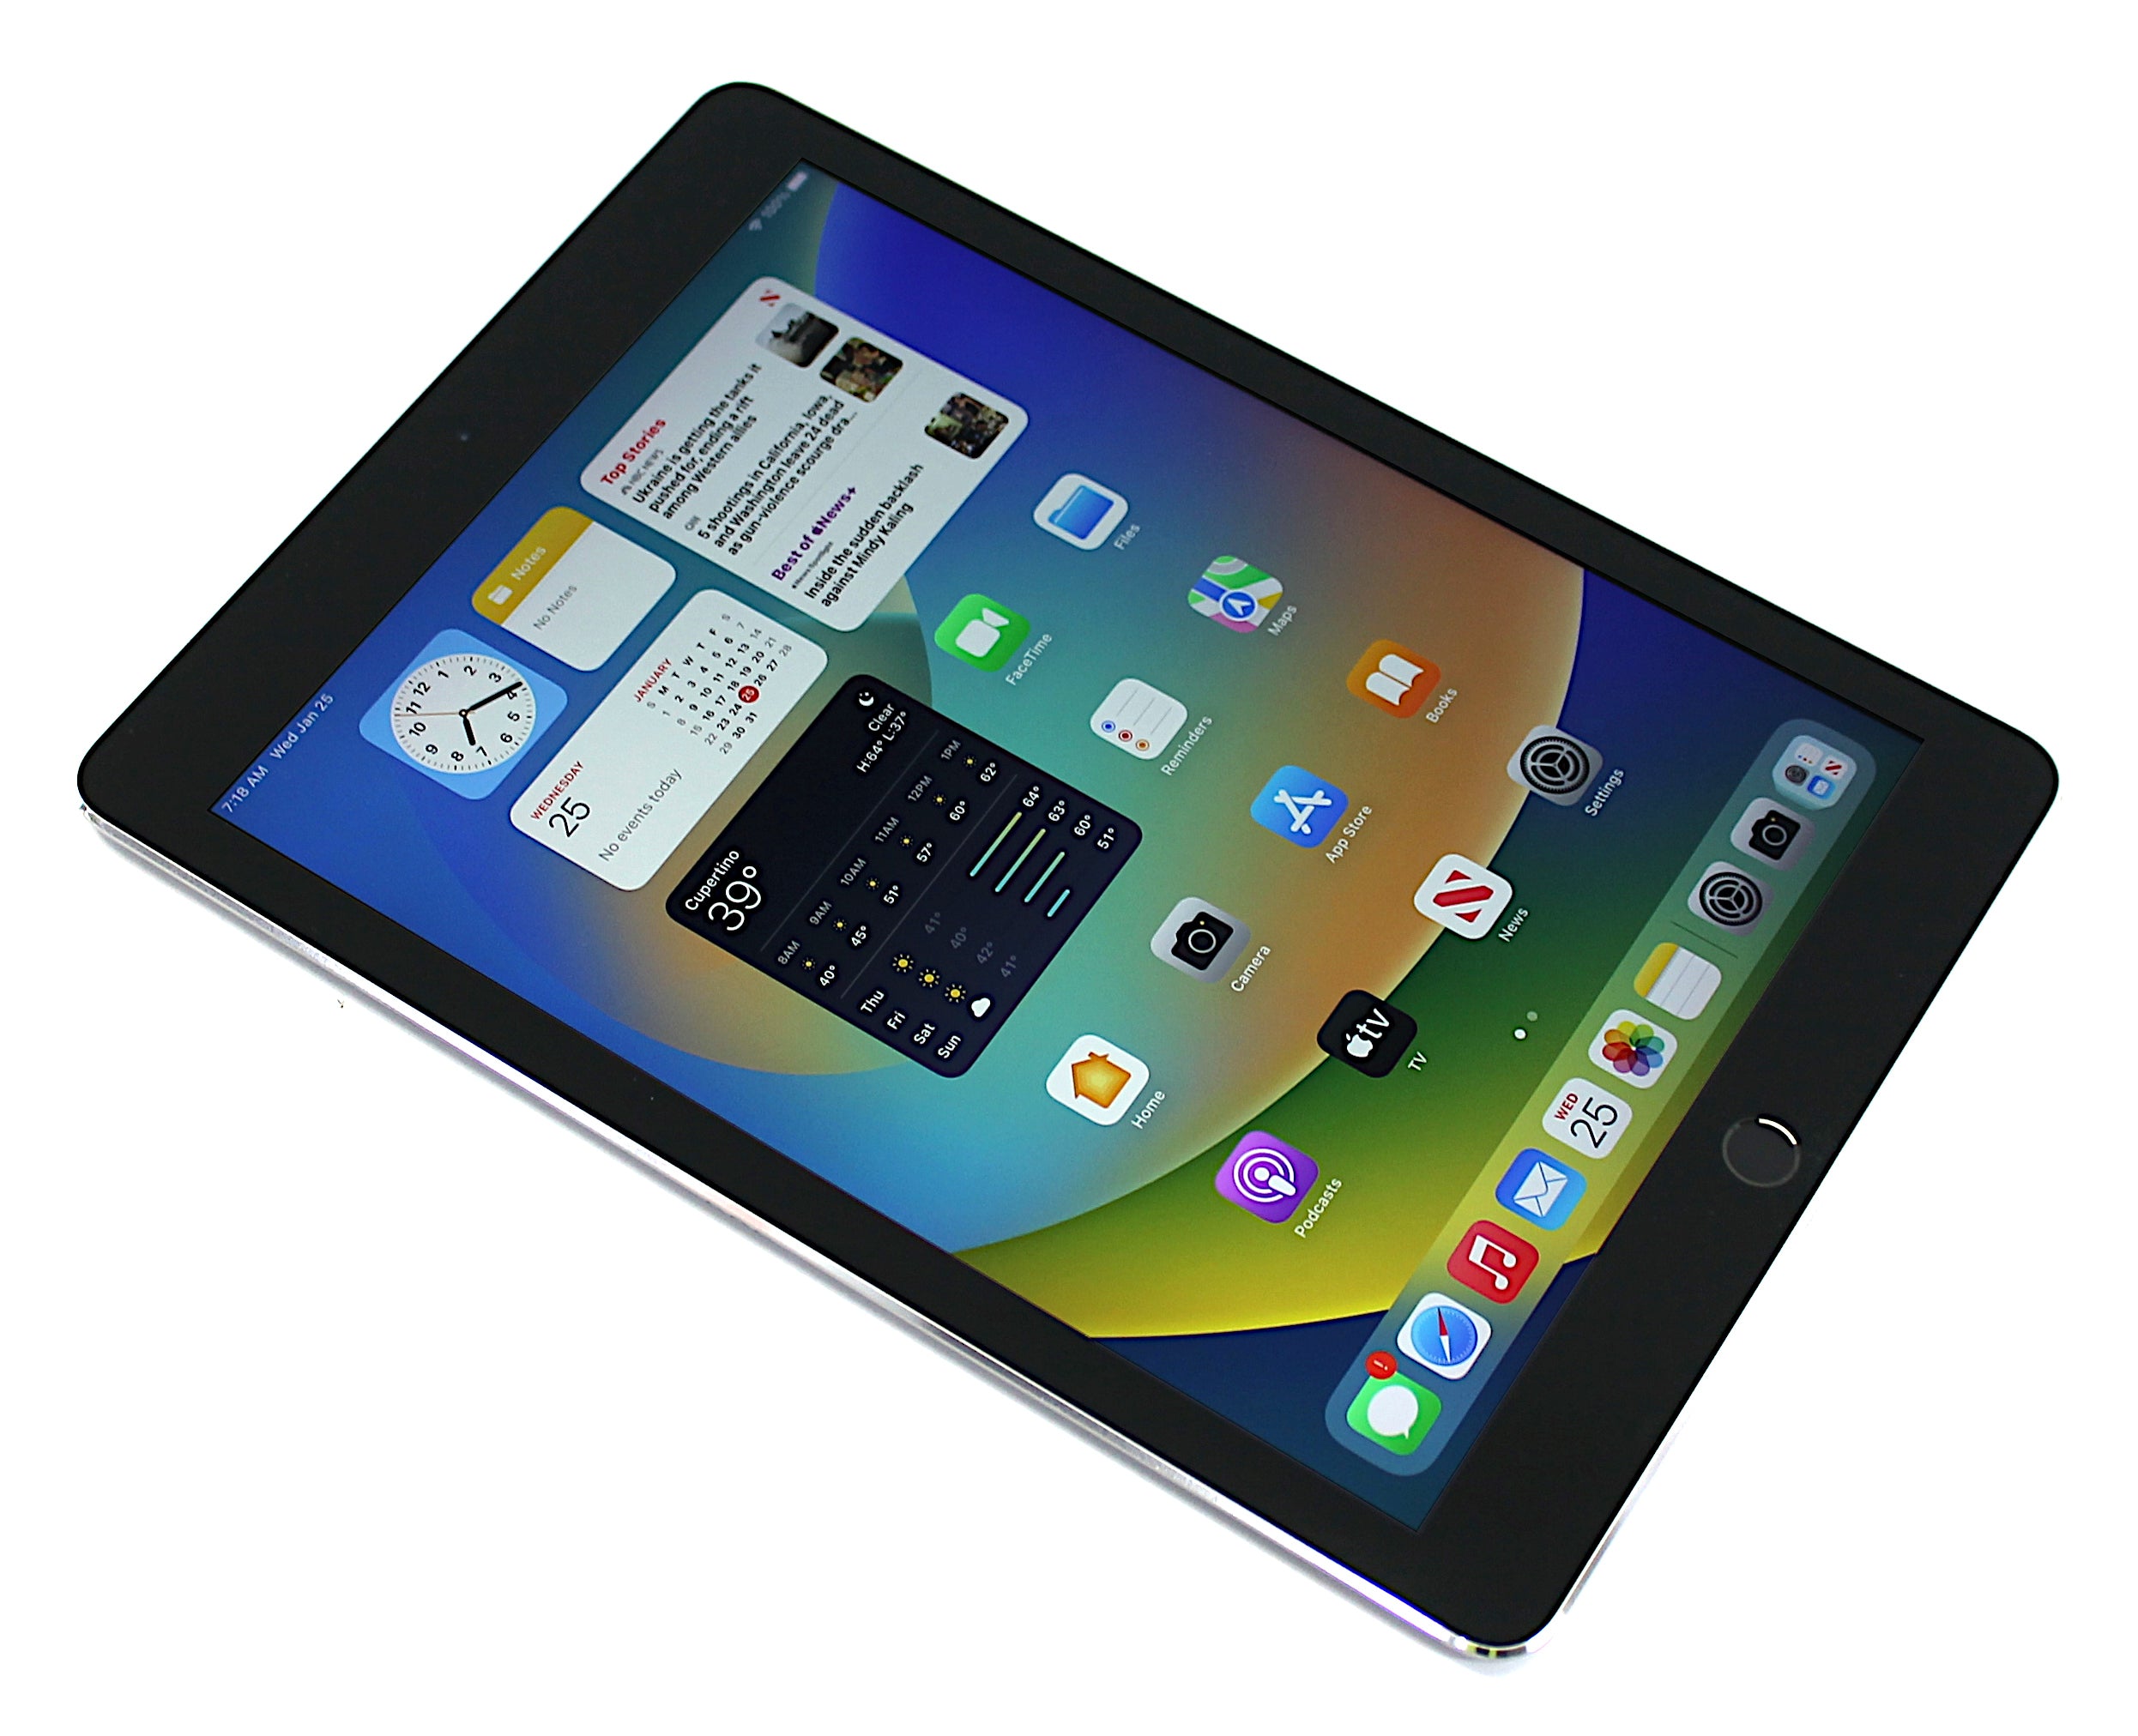 Apple iPad Pro Tablet, 9.7", 256GB, WiFi, Space Grey, A1673